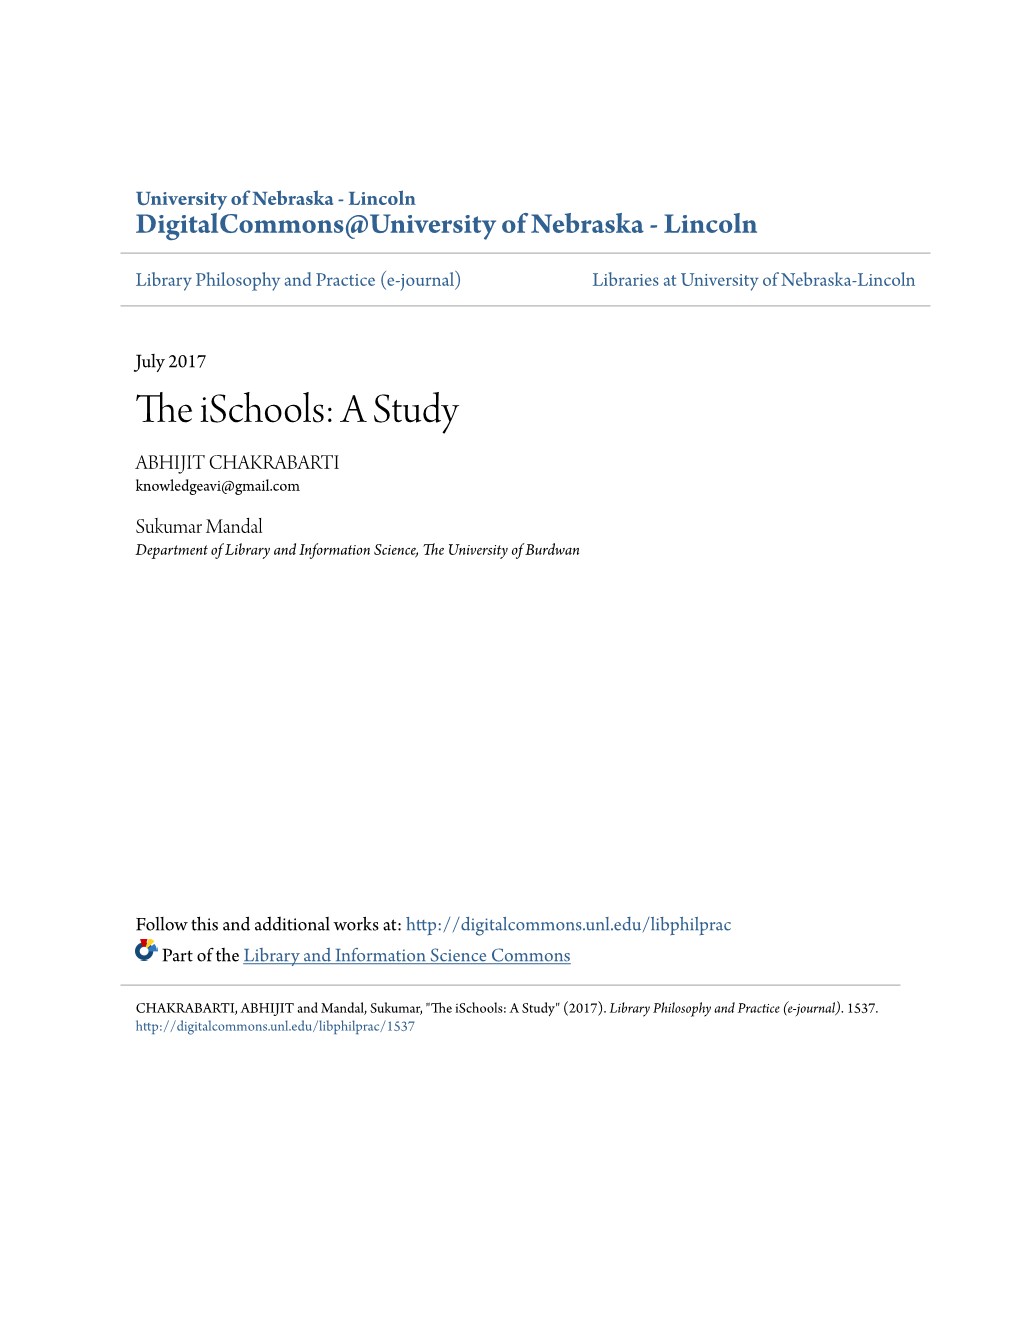 The Ischools: a Study ABHIJIT CHAKRABARTI Knowledgeavi@Gmail.Com